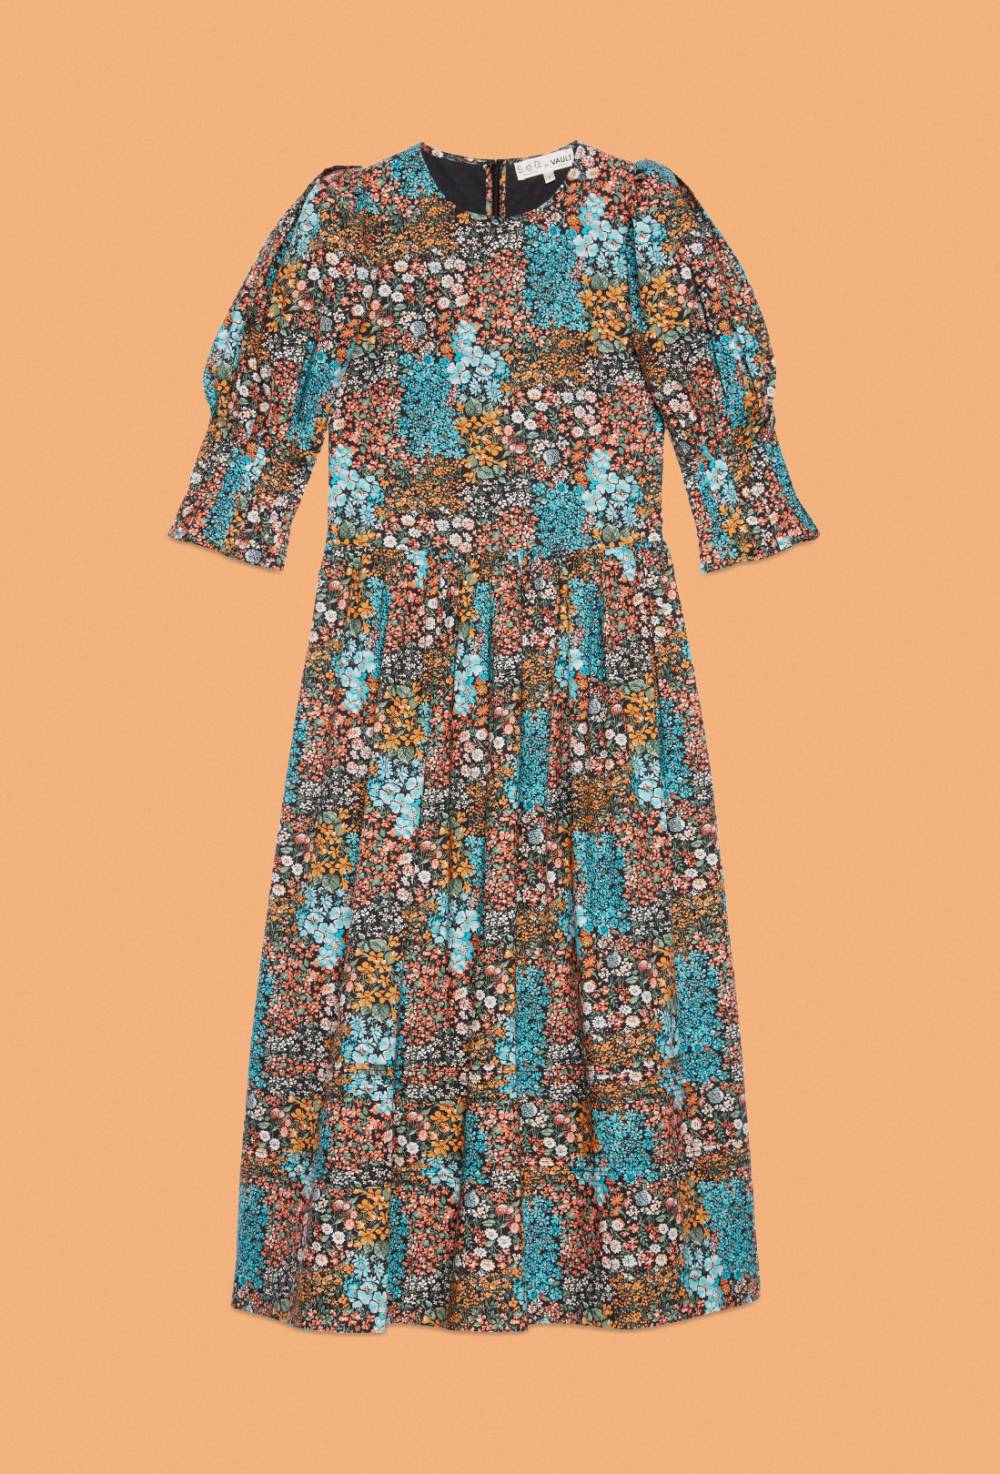 Cervinia print dress by Sea image #1